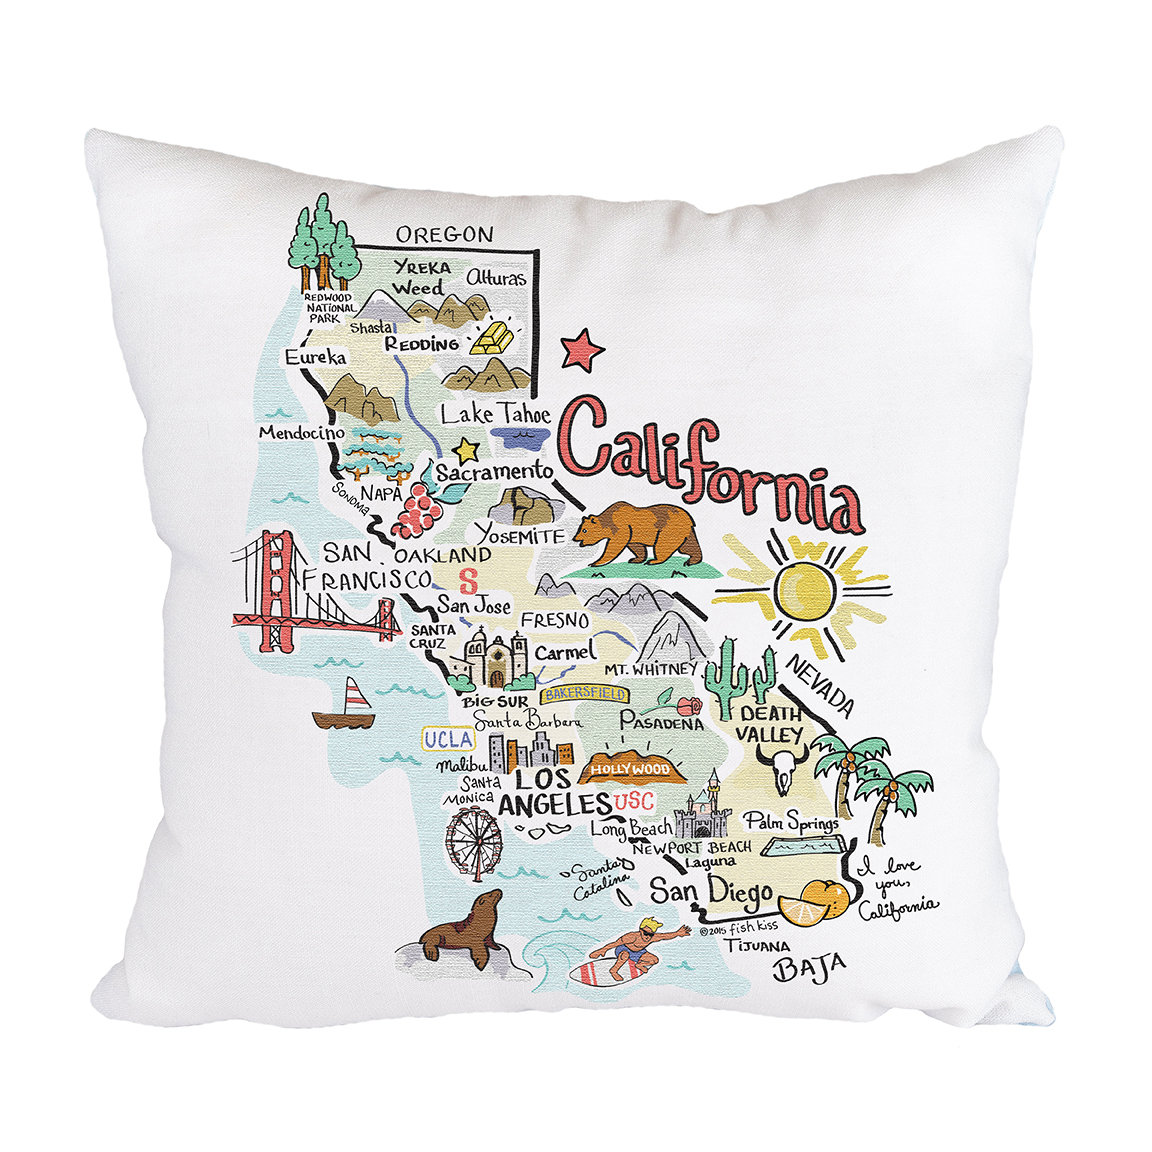 Big Sur California Throw Pillow by Groppo